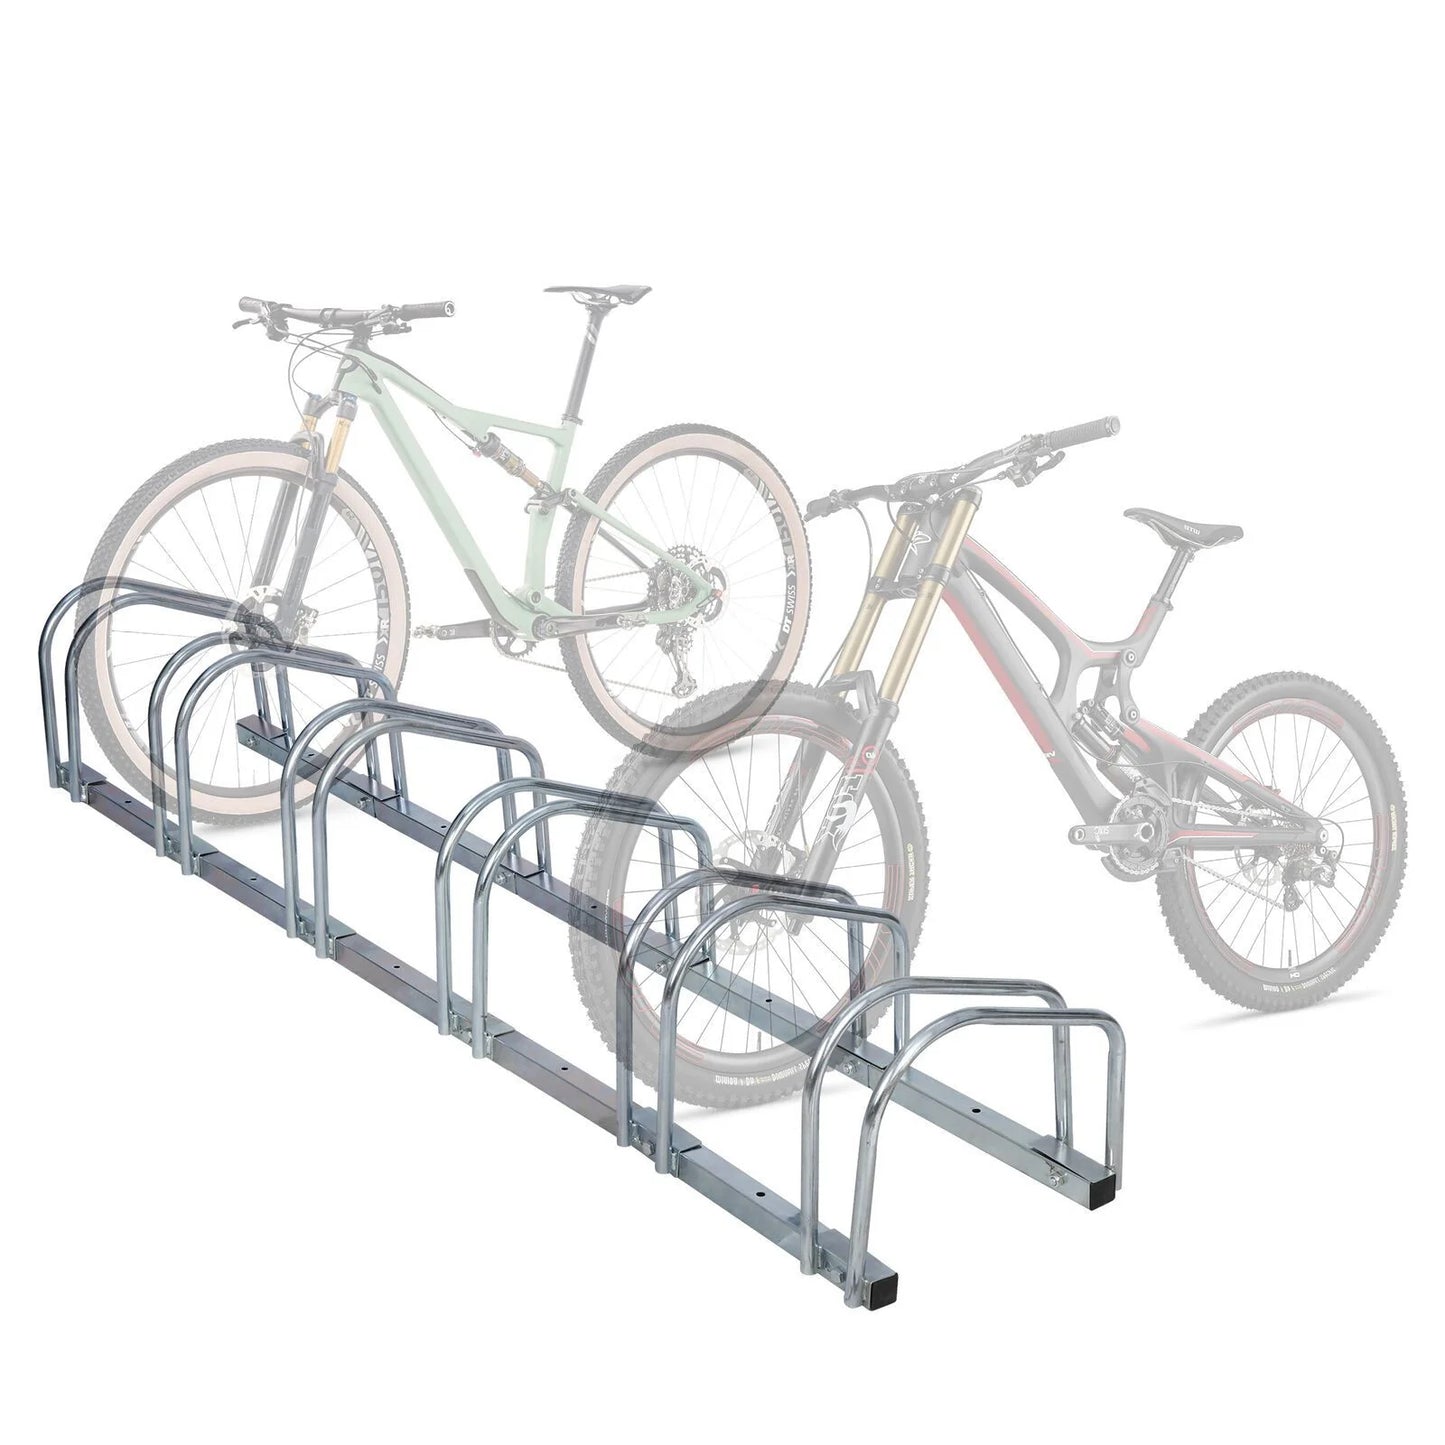 Bike Rack - Bicycle Rack - 1-6 Adjustable Bike Stand - Parking Bicycle Stand